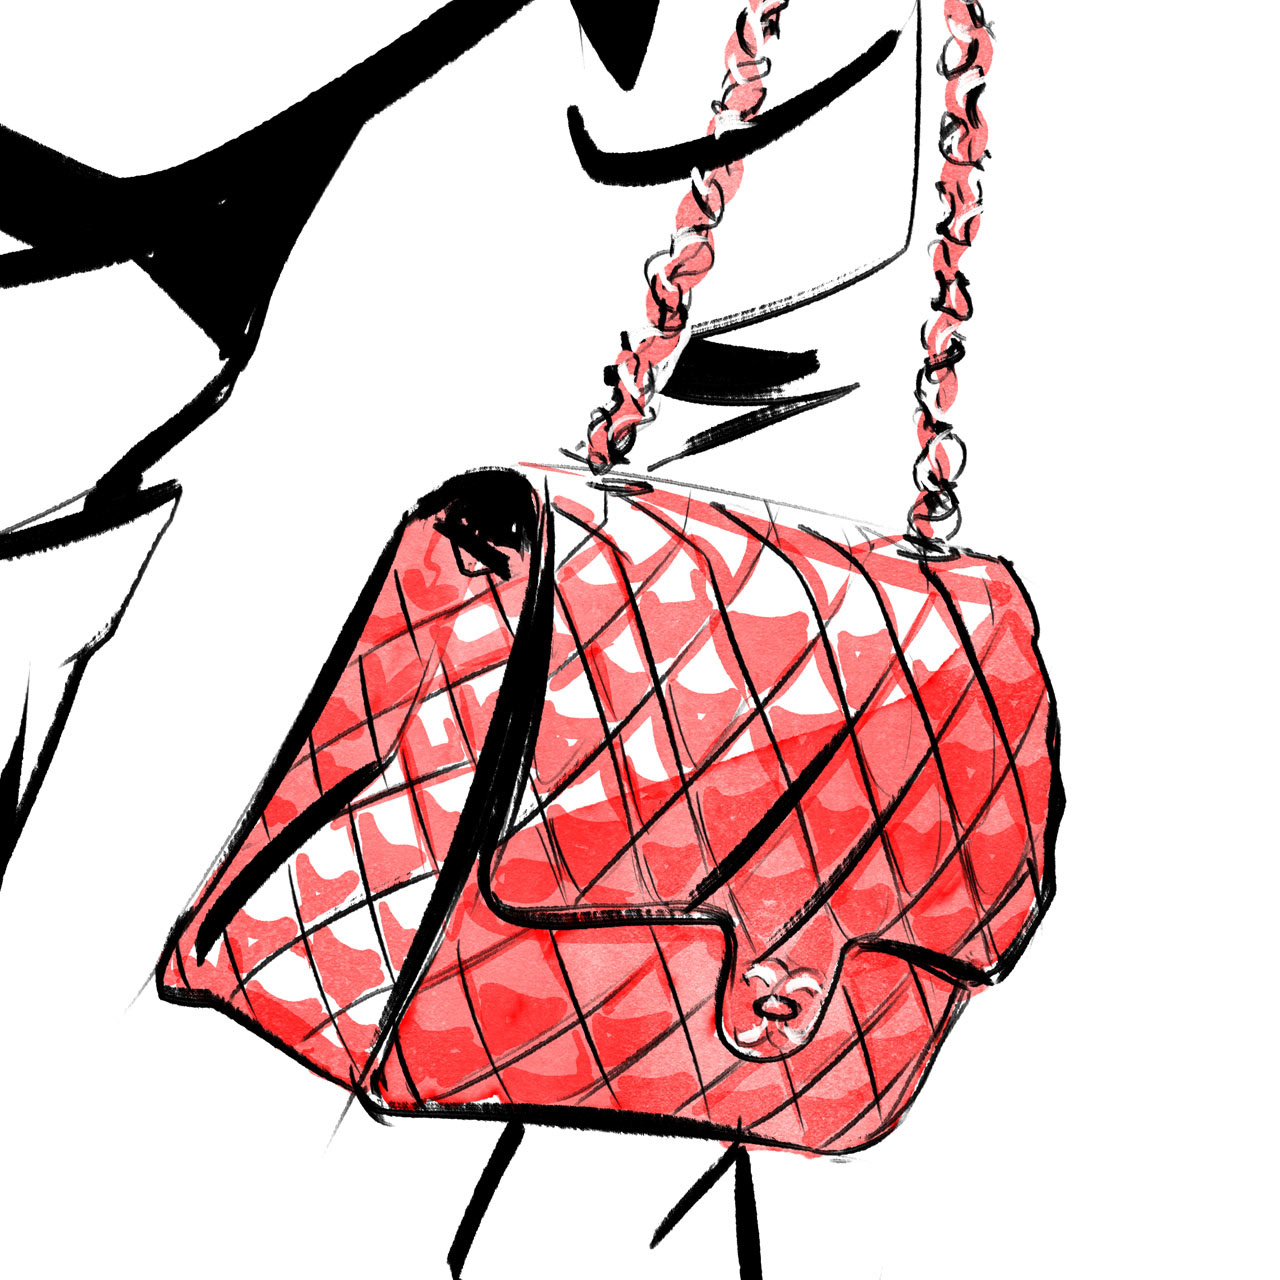 Chanel Bag Clipart 